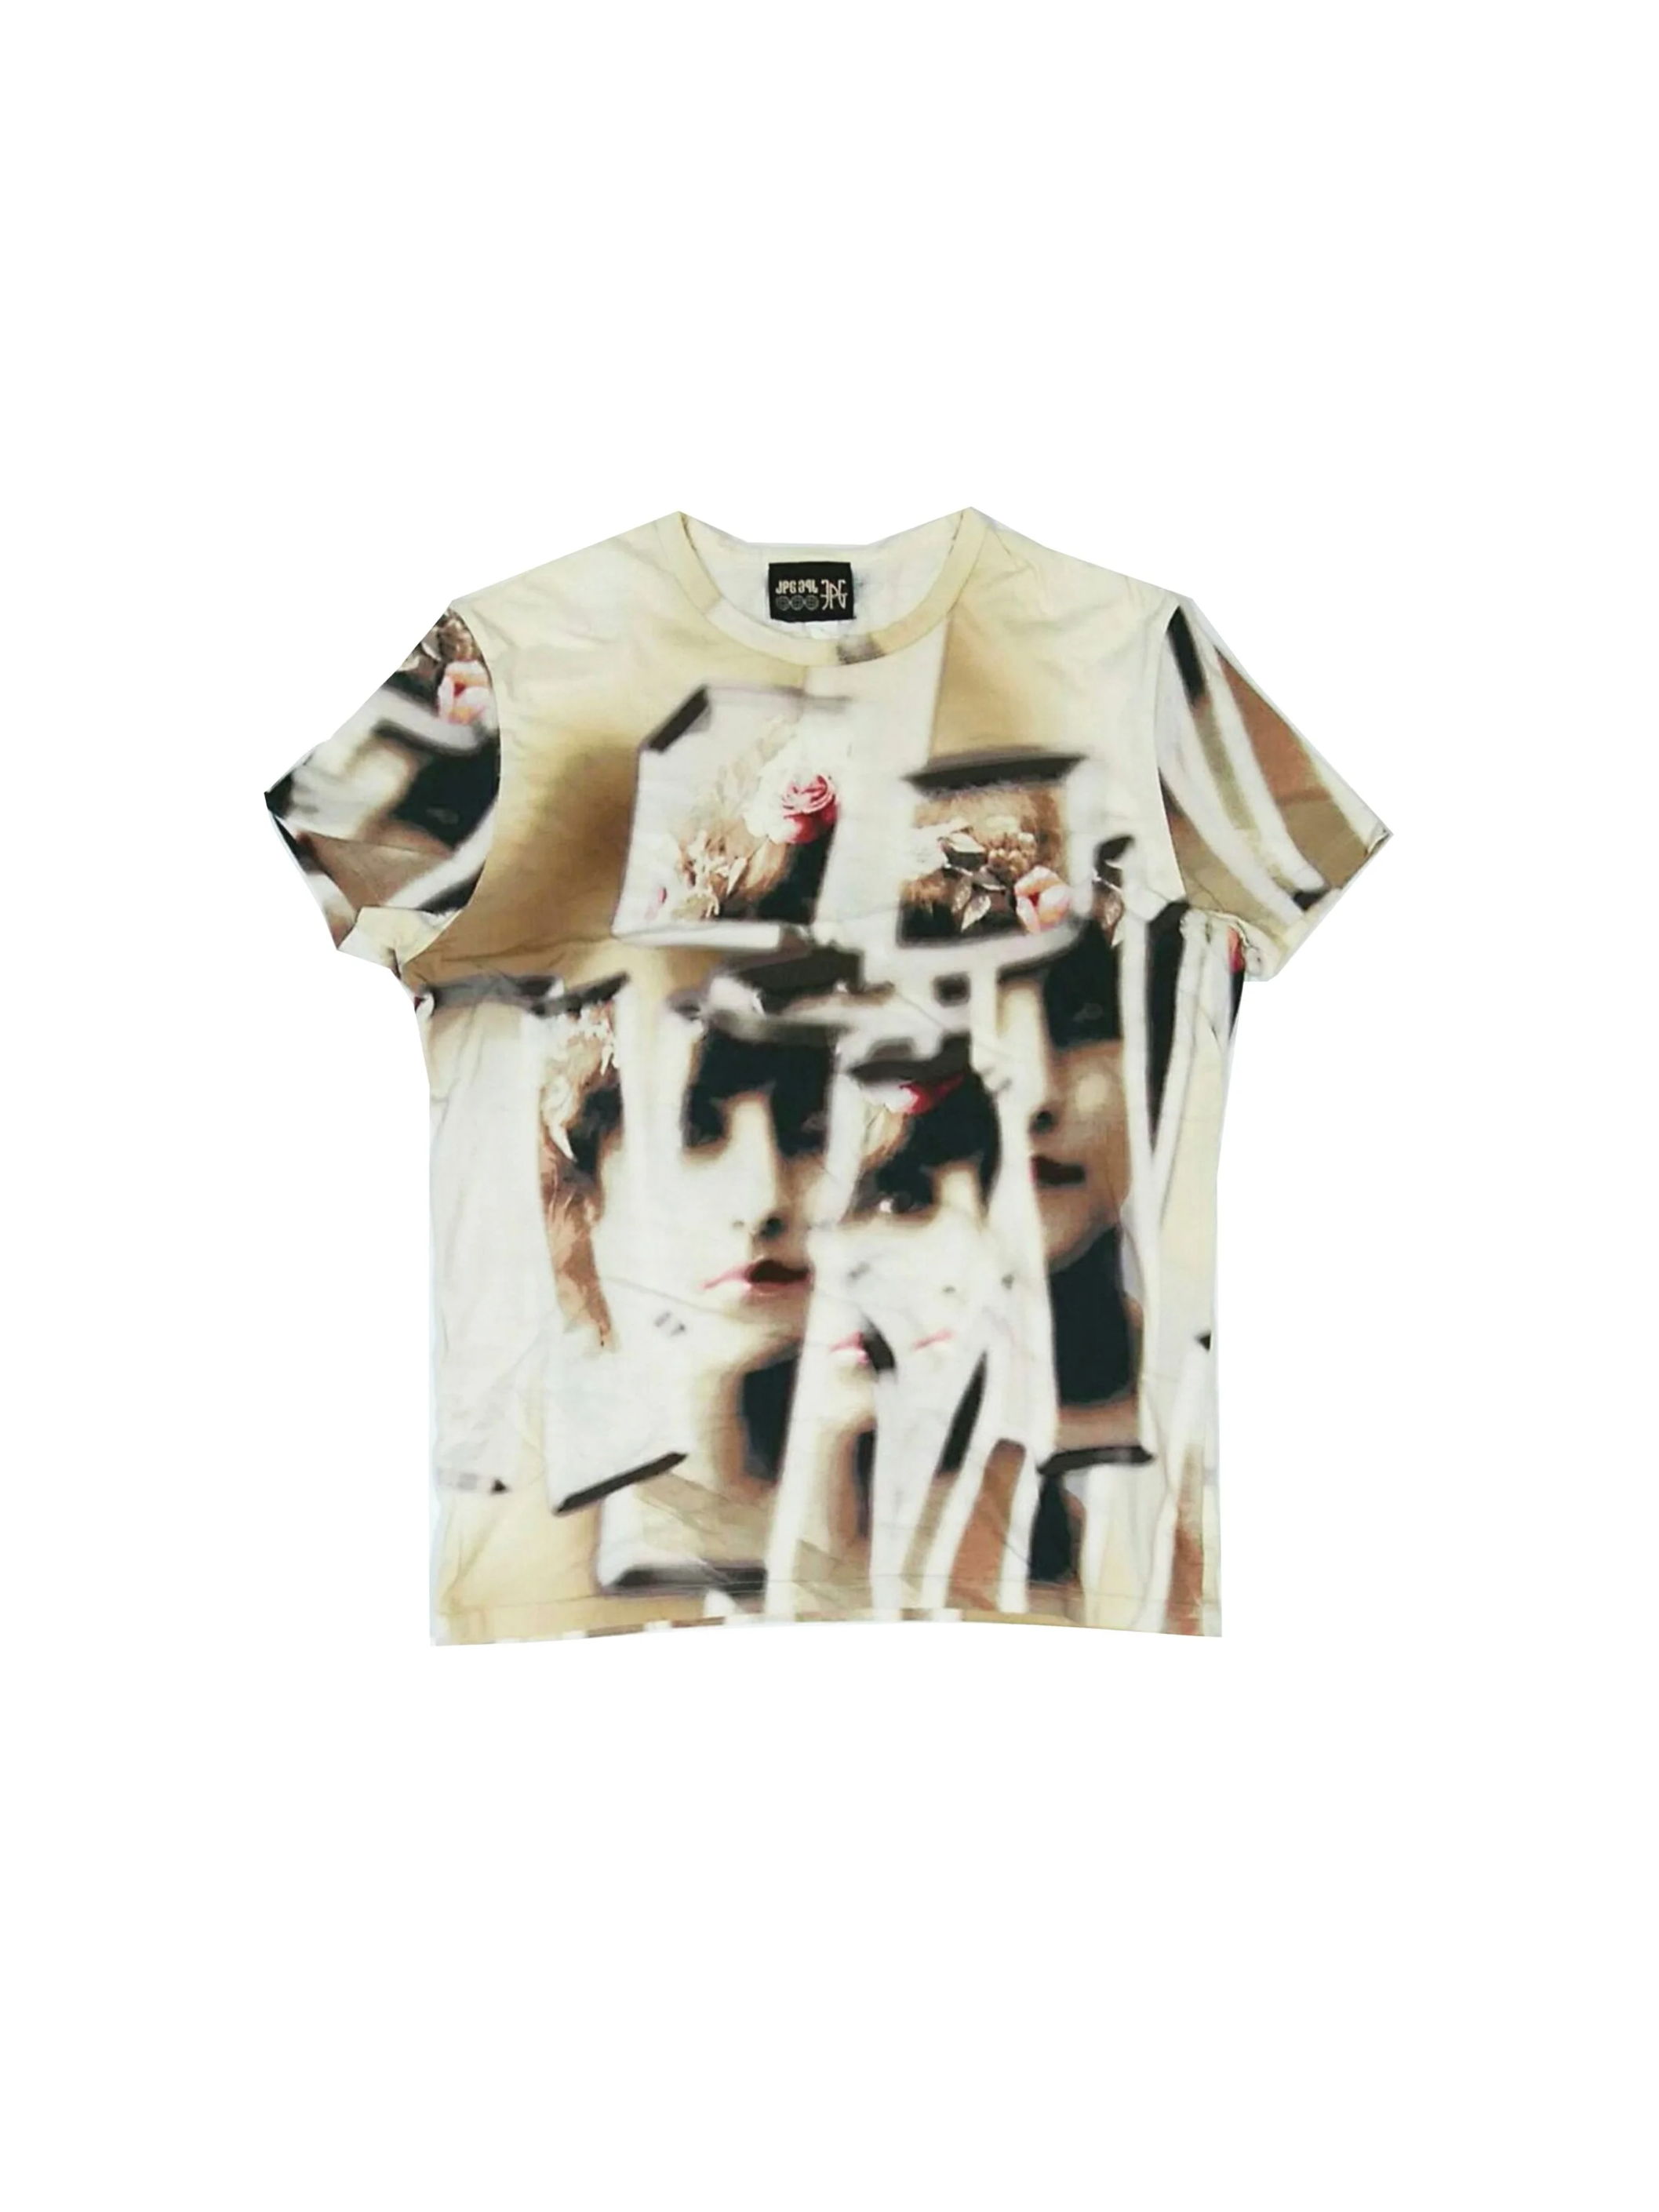 Jean Paul Gaultier 2000s Multi-Faces Beige Shirt